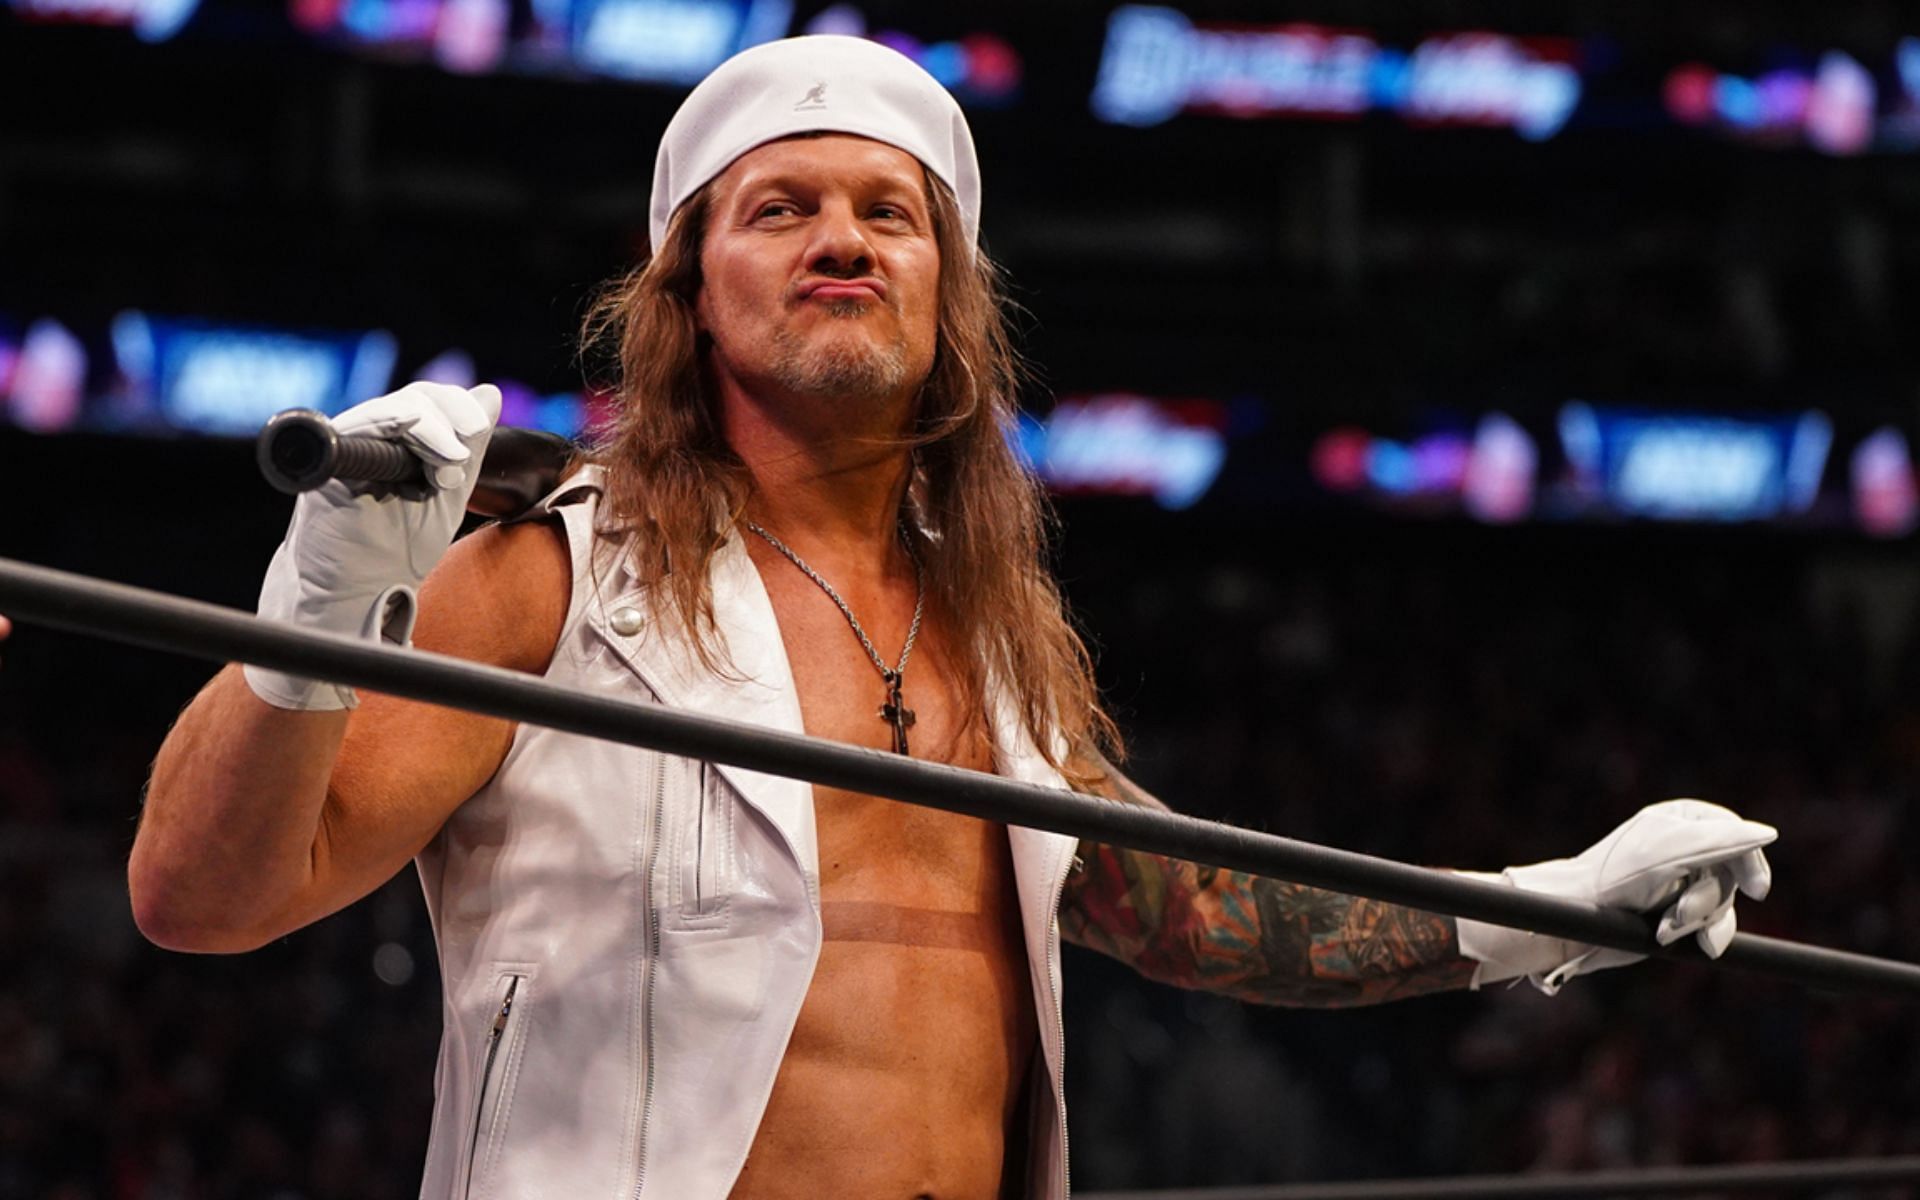 AEW star Chris Jericho had an interim world title match earlier on Dynamite.